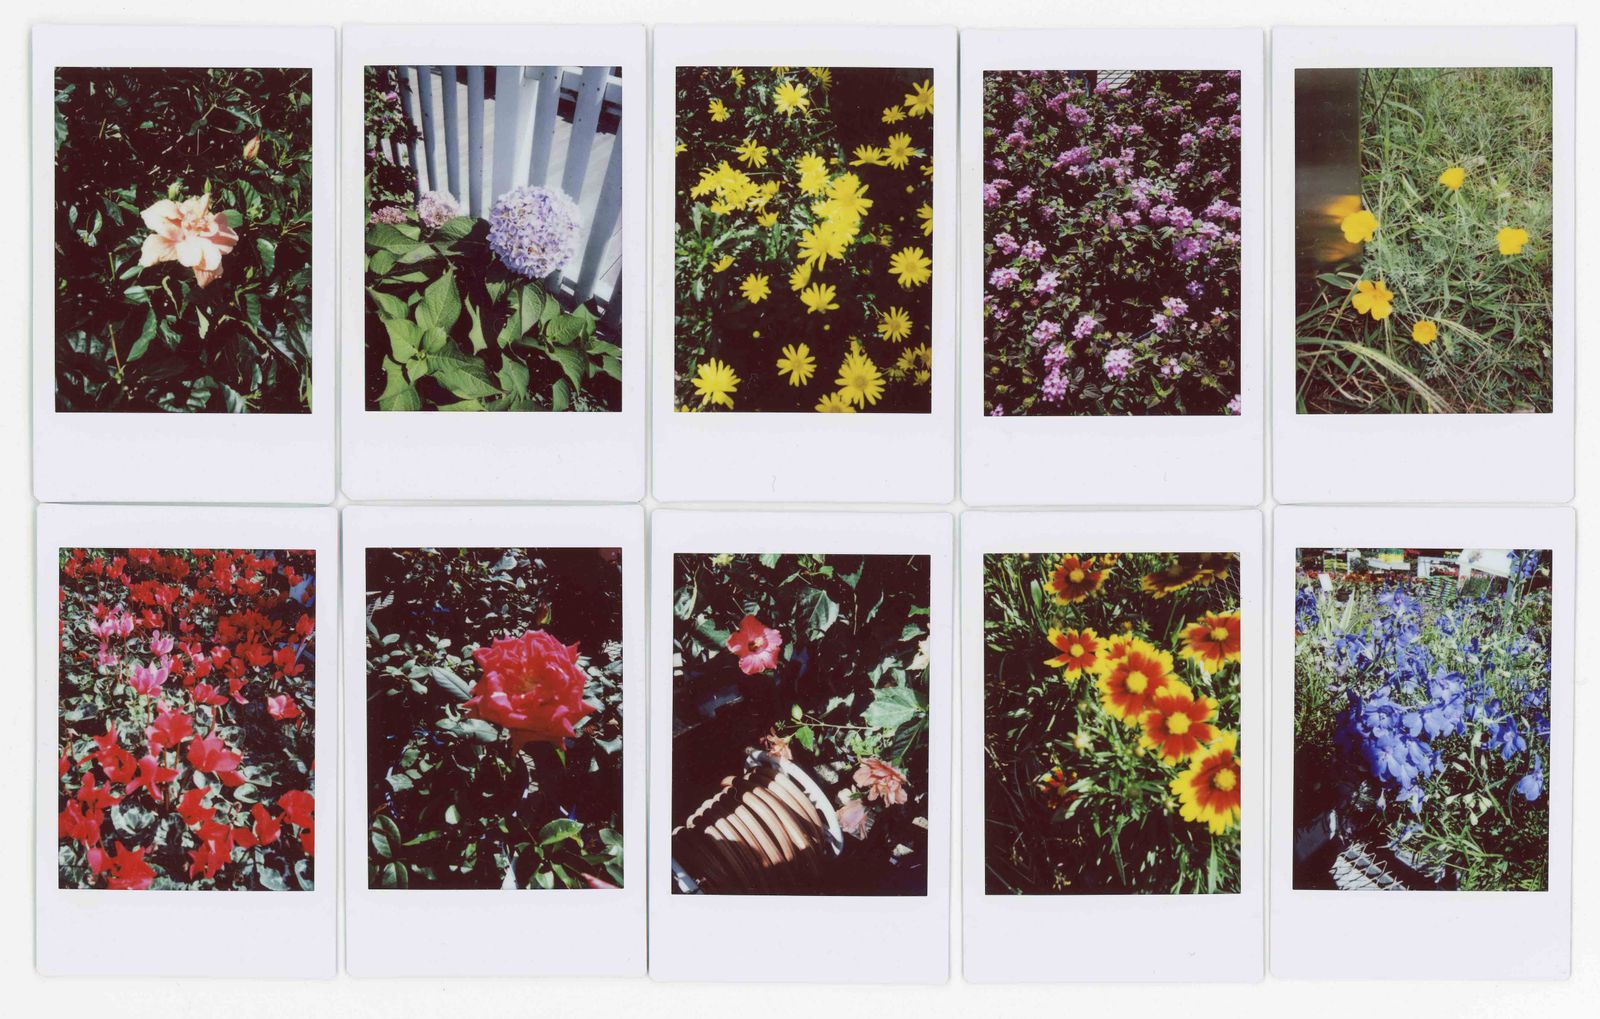 © RACHEL TREIDE - "A Minute Fraction of All the Flowers I've Ever Seen," photographs 131-140